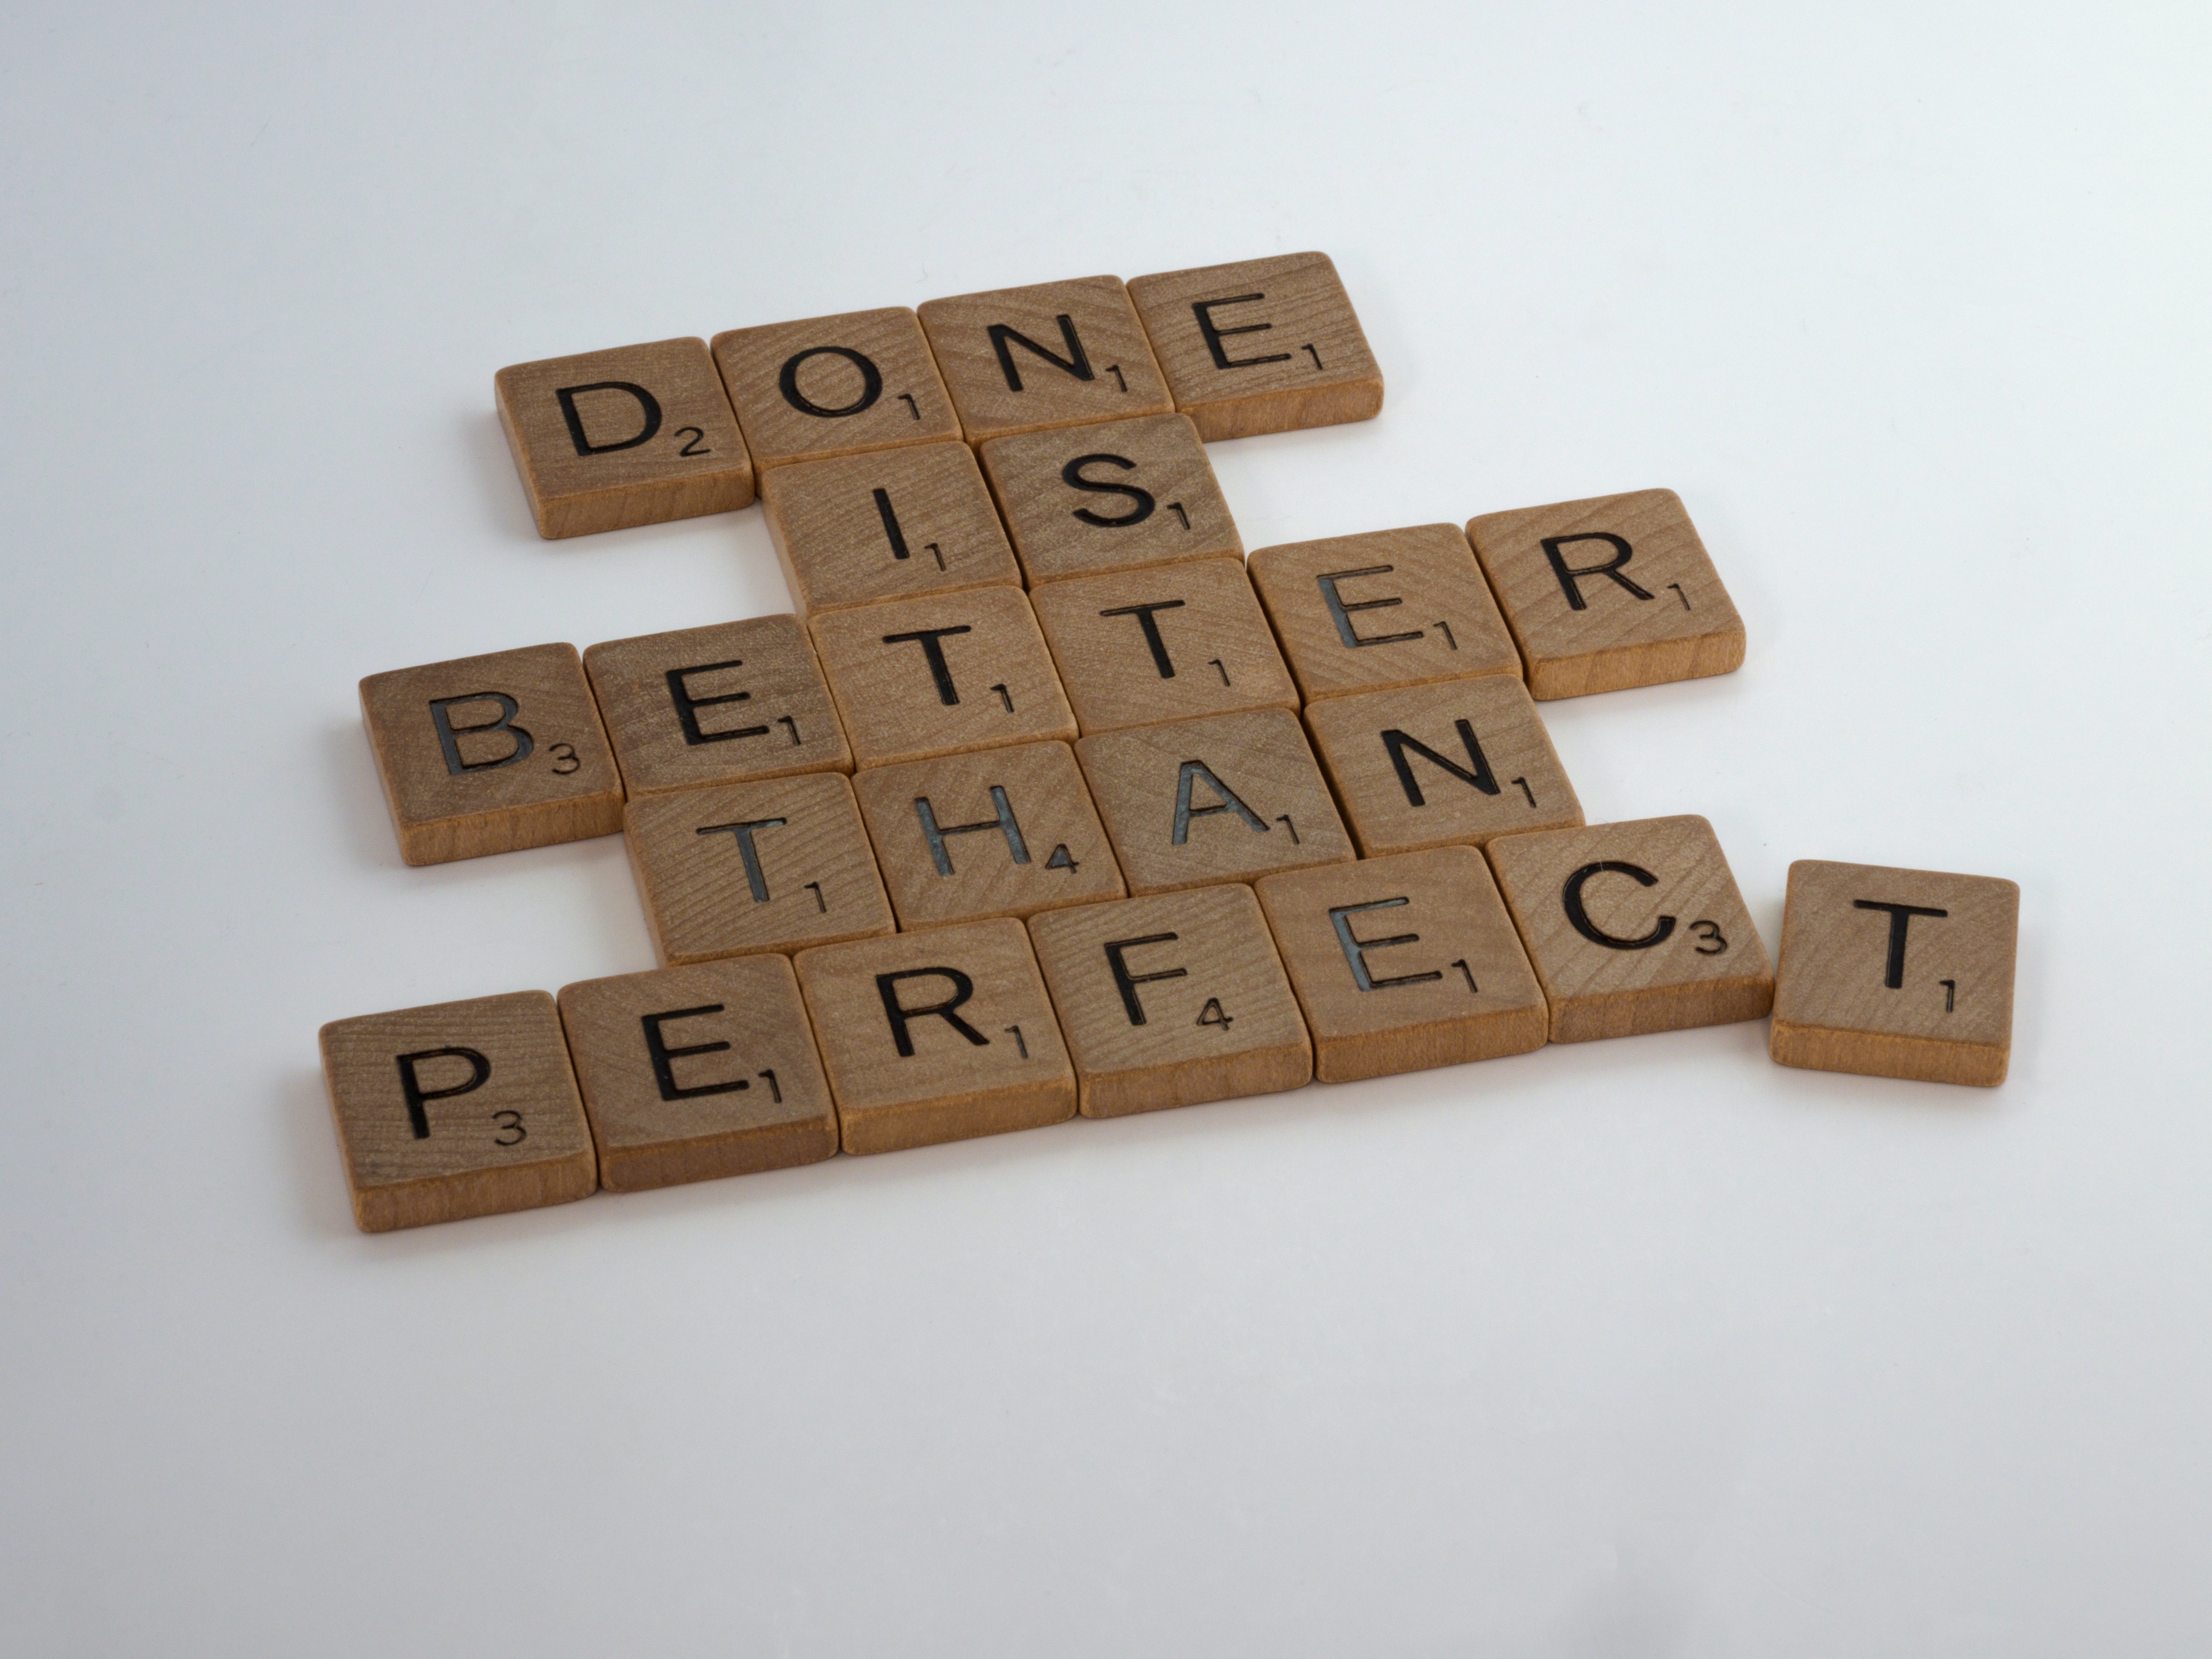 Overcome perfectionism